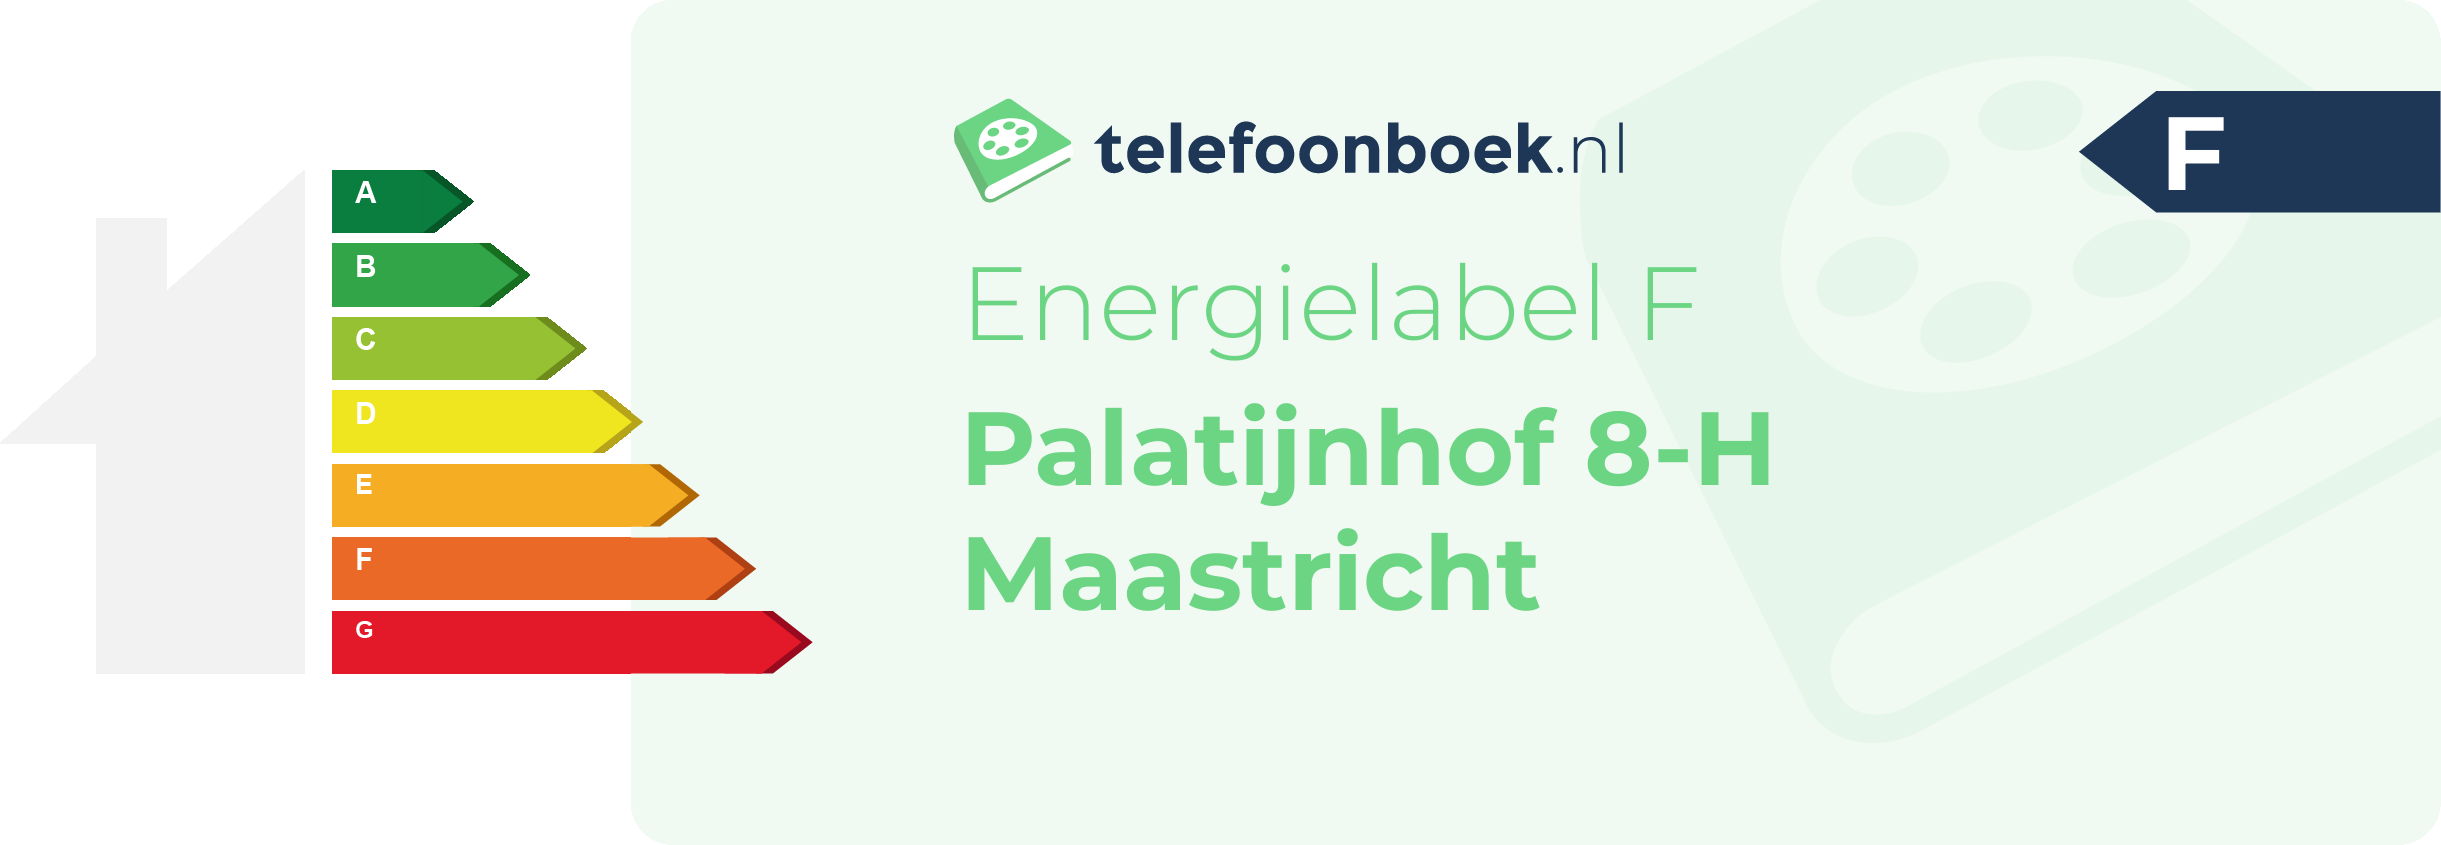 Energielabel Palatijnhof 8-H Maastricht